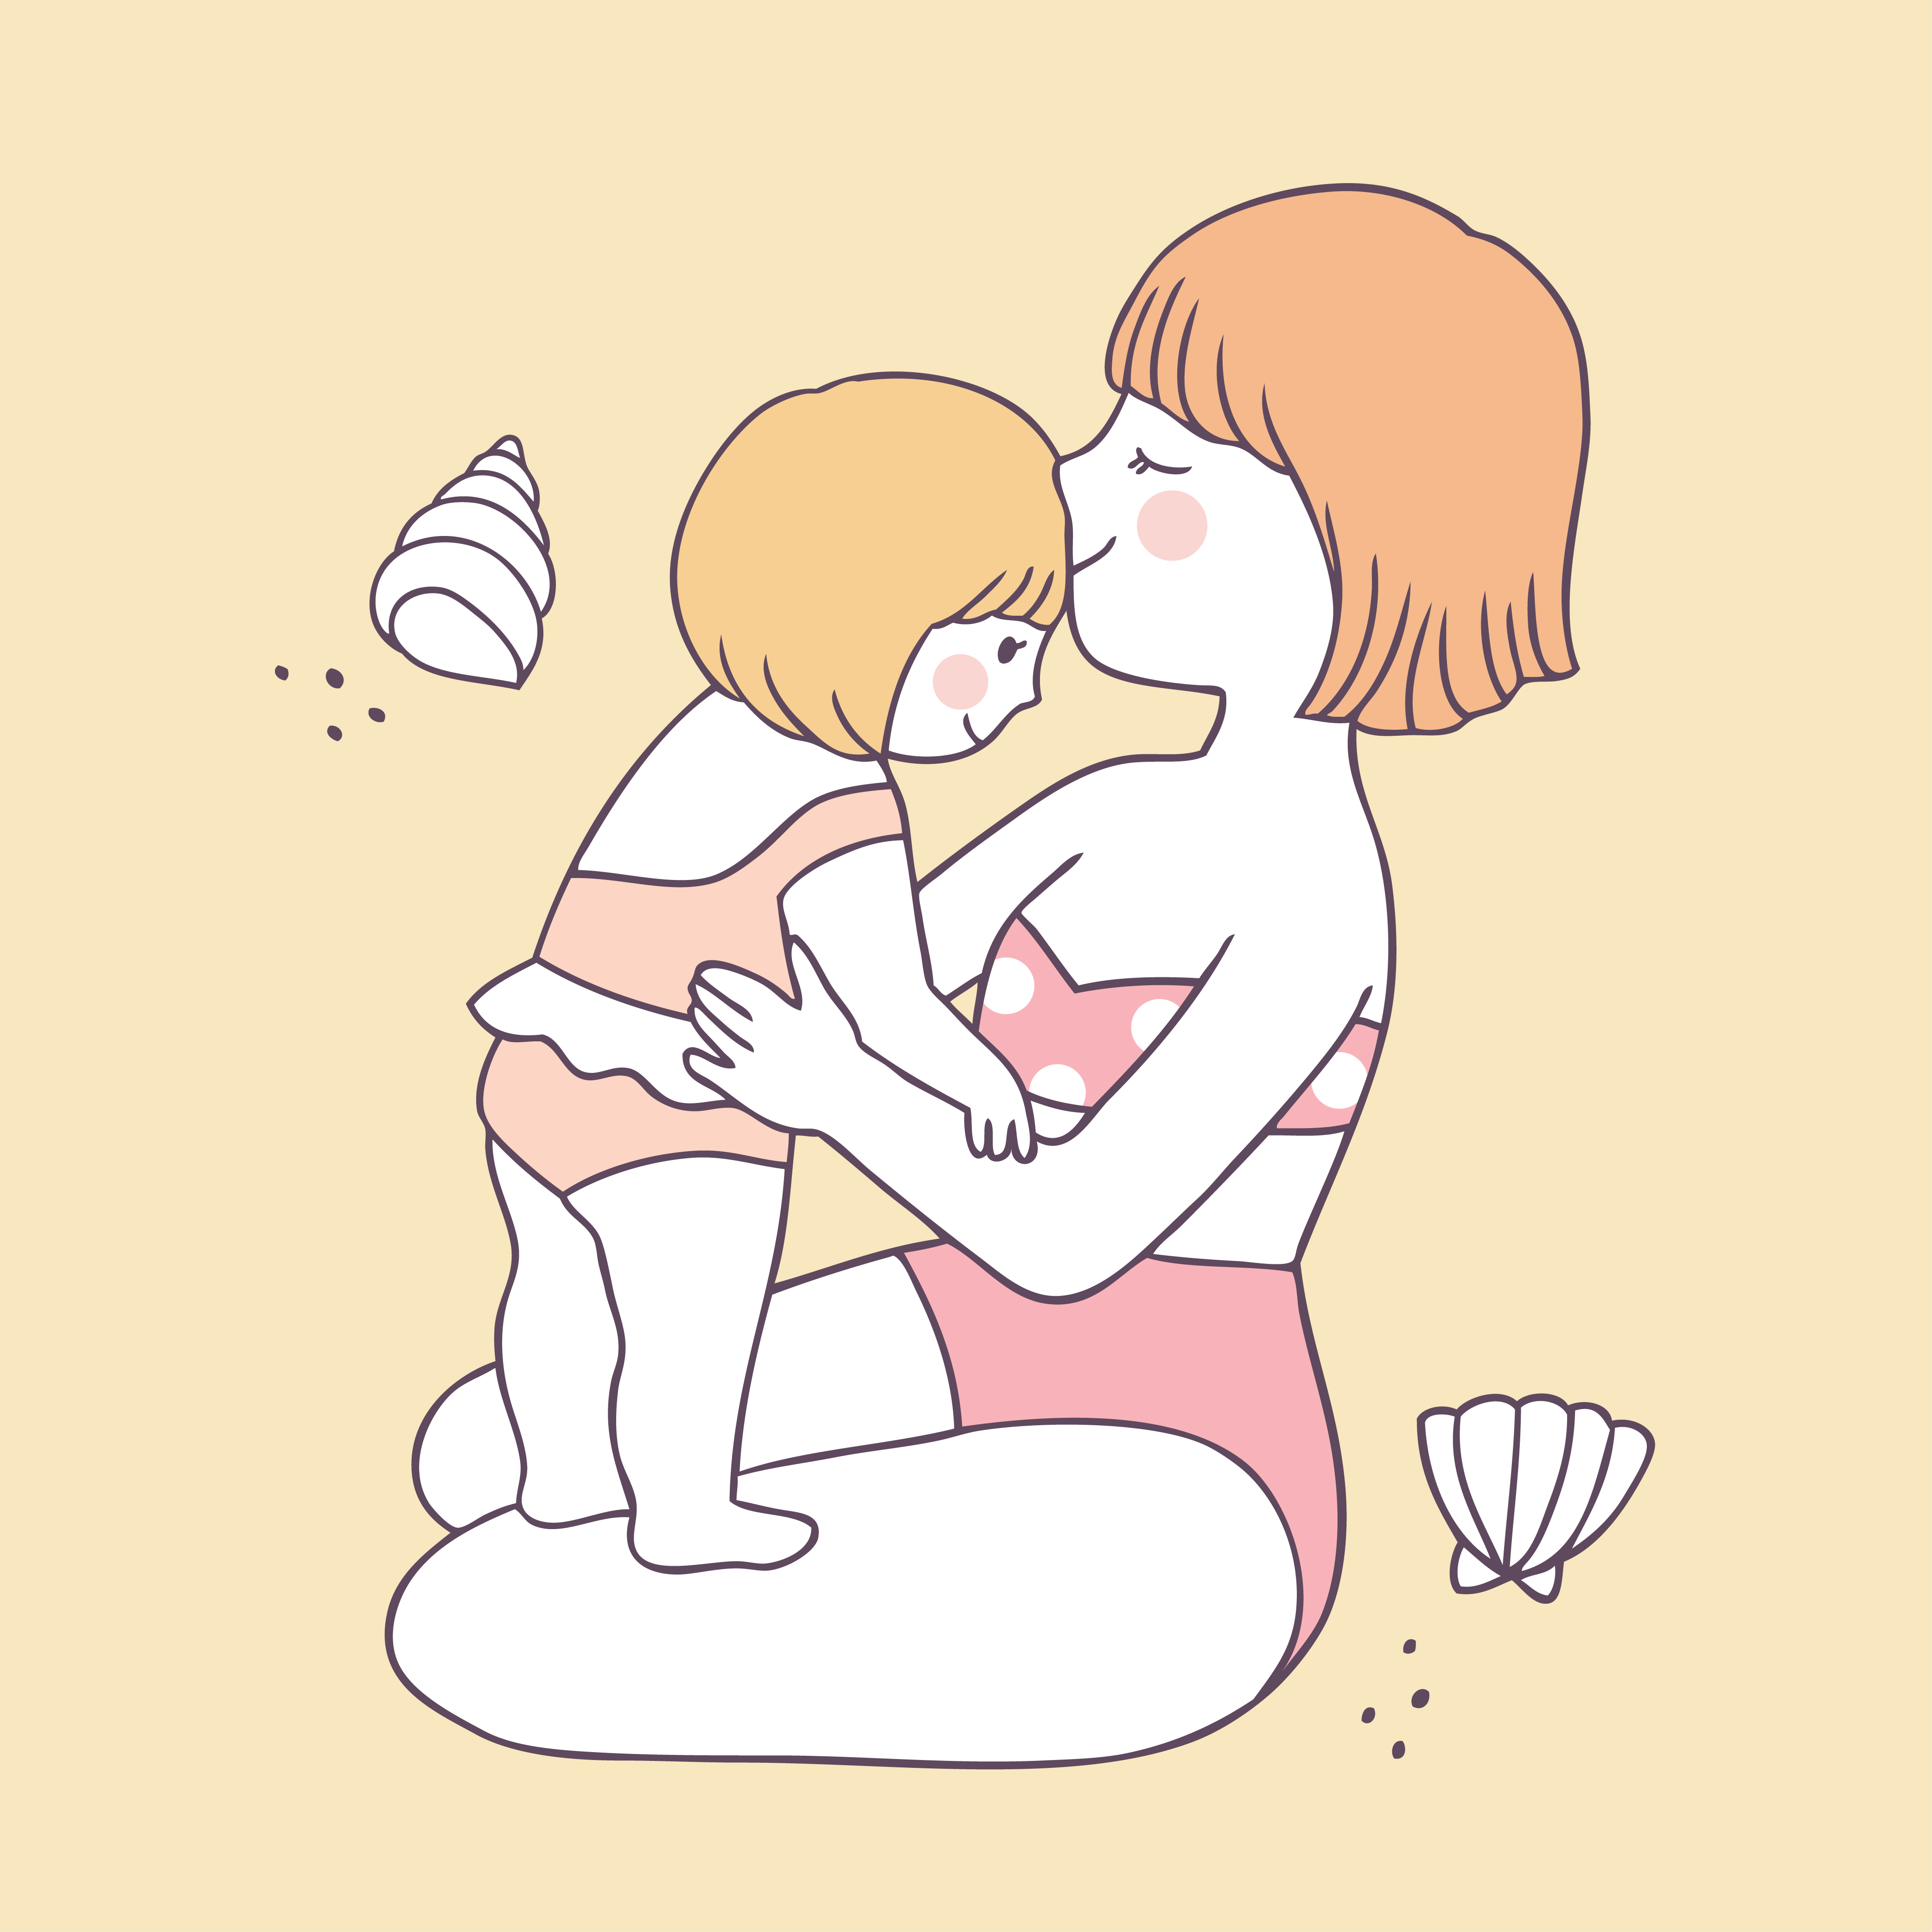 Download Cartoon cute summer mom and daughter vector. - Download Free Vectors, Clipart Graphics & Vector Art